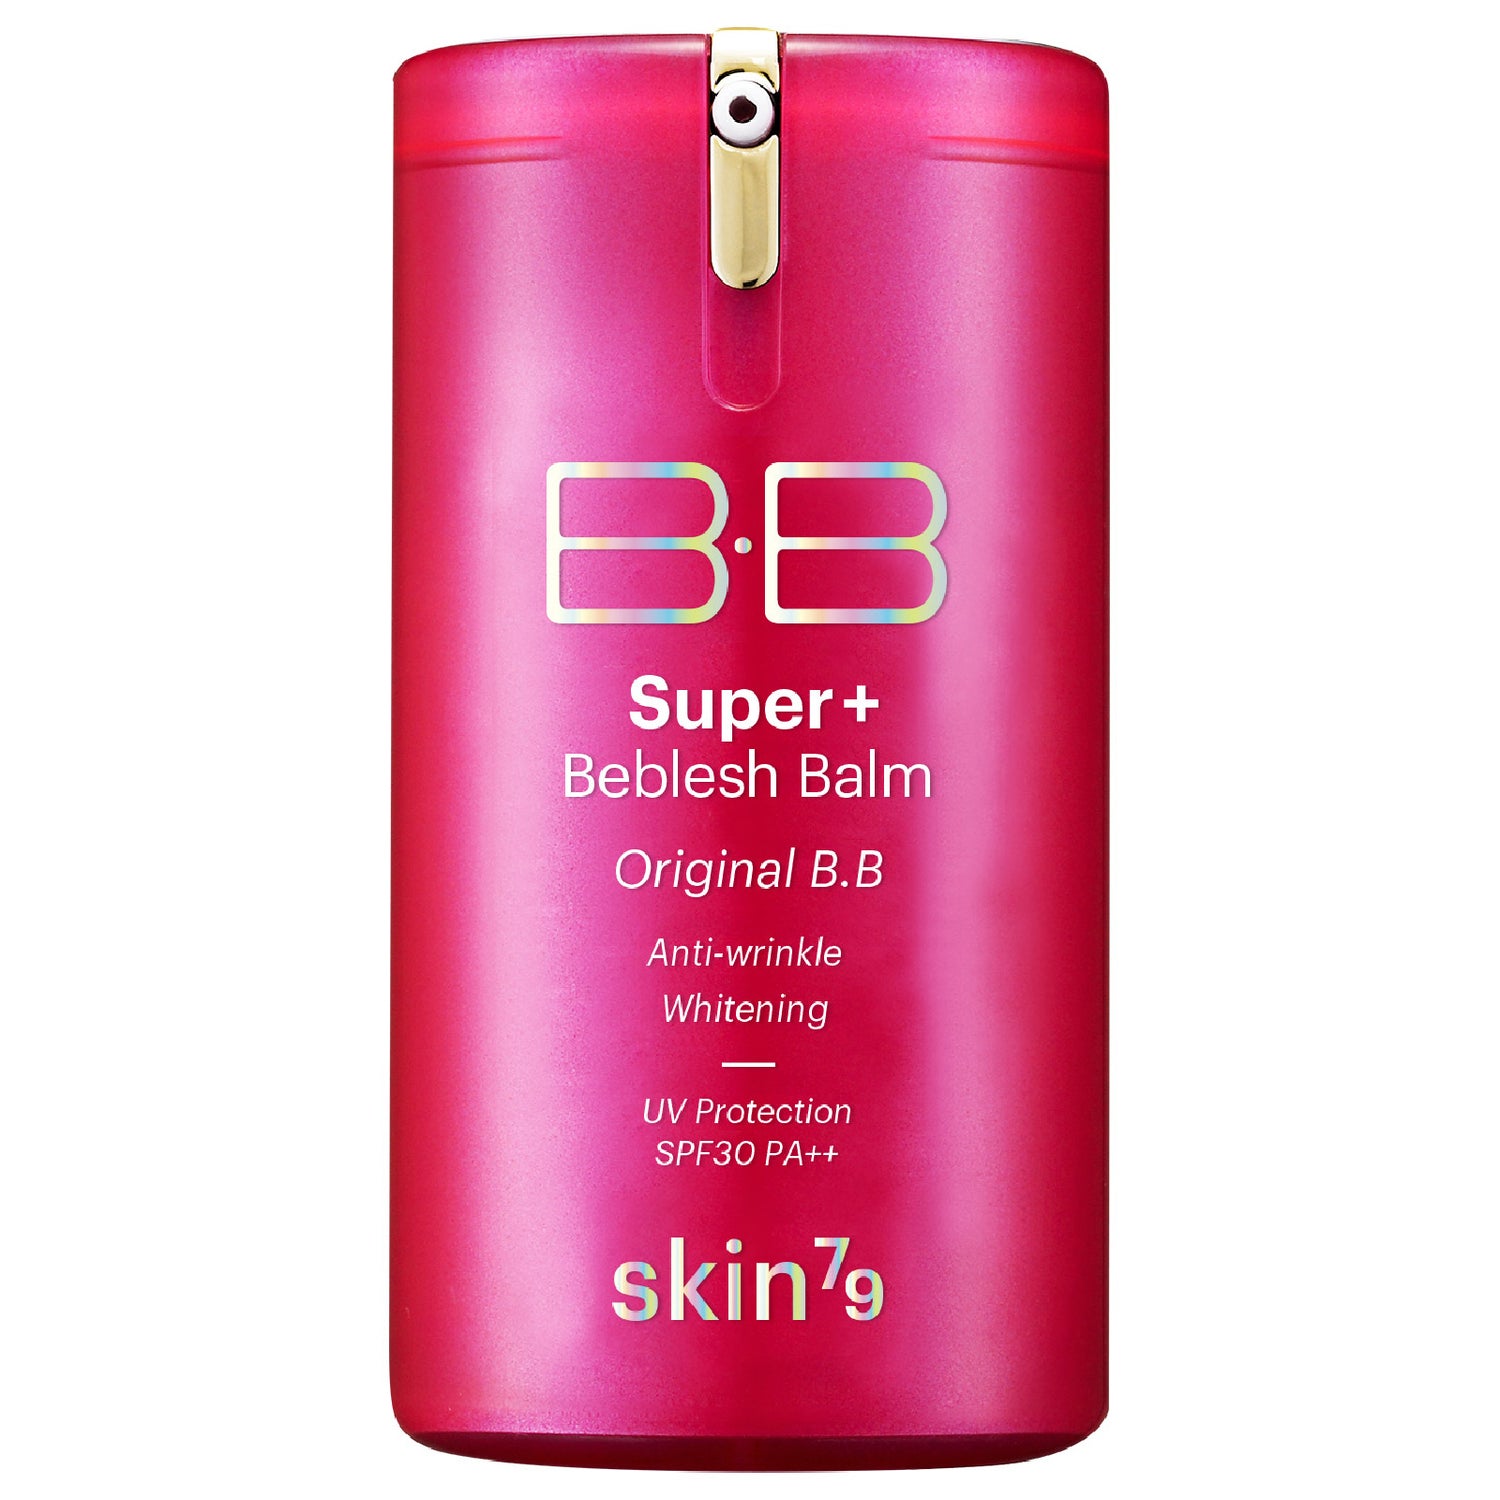 Bálsamo Super Plus Beblesh Triple Functions da Skin79 FPS 30 PA++ 40 g - Hot Pink